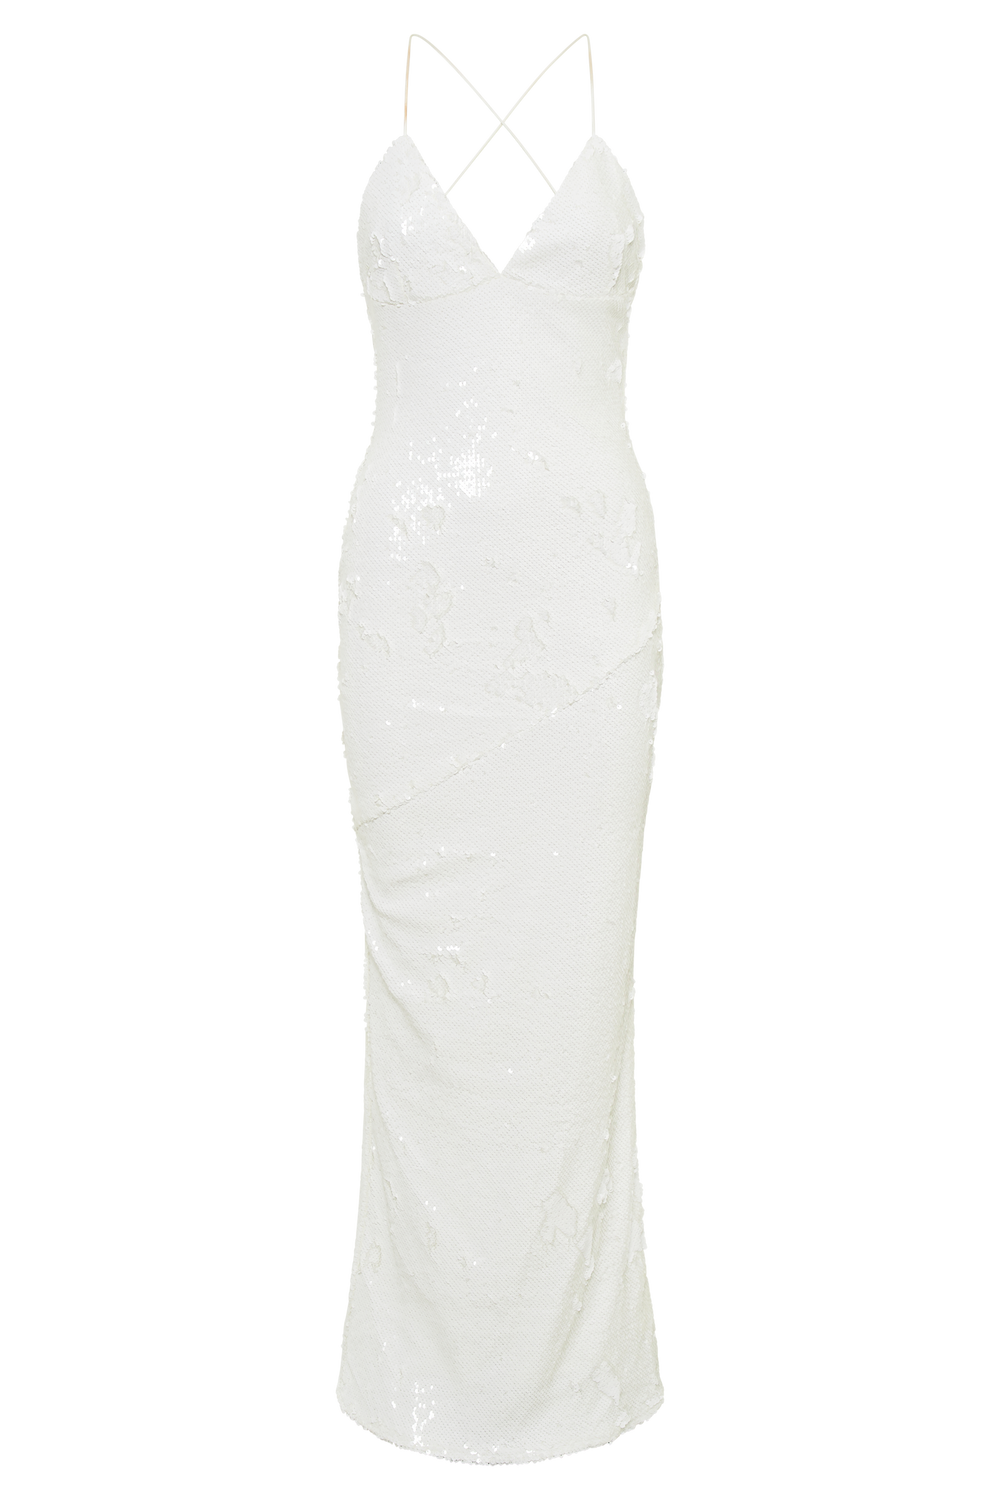 Gracie Sequin Maxi Dress - White